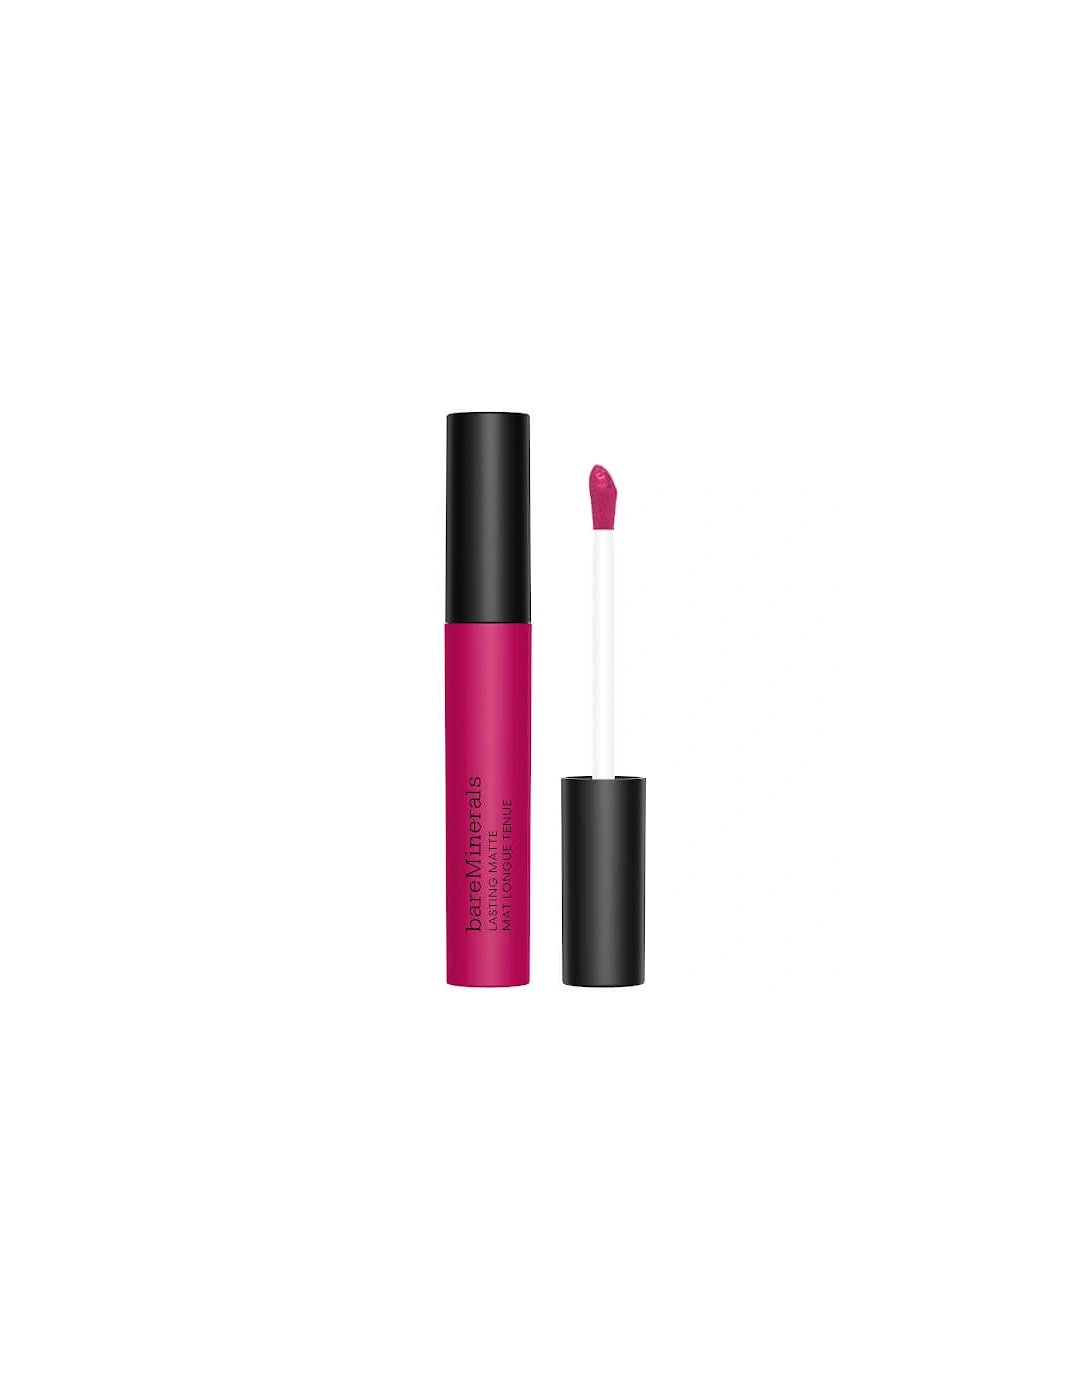 Mineralist Comfort Matte Liquid Lipstick - Expressive, 2 of 1